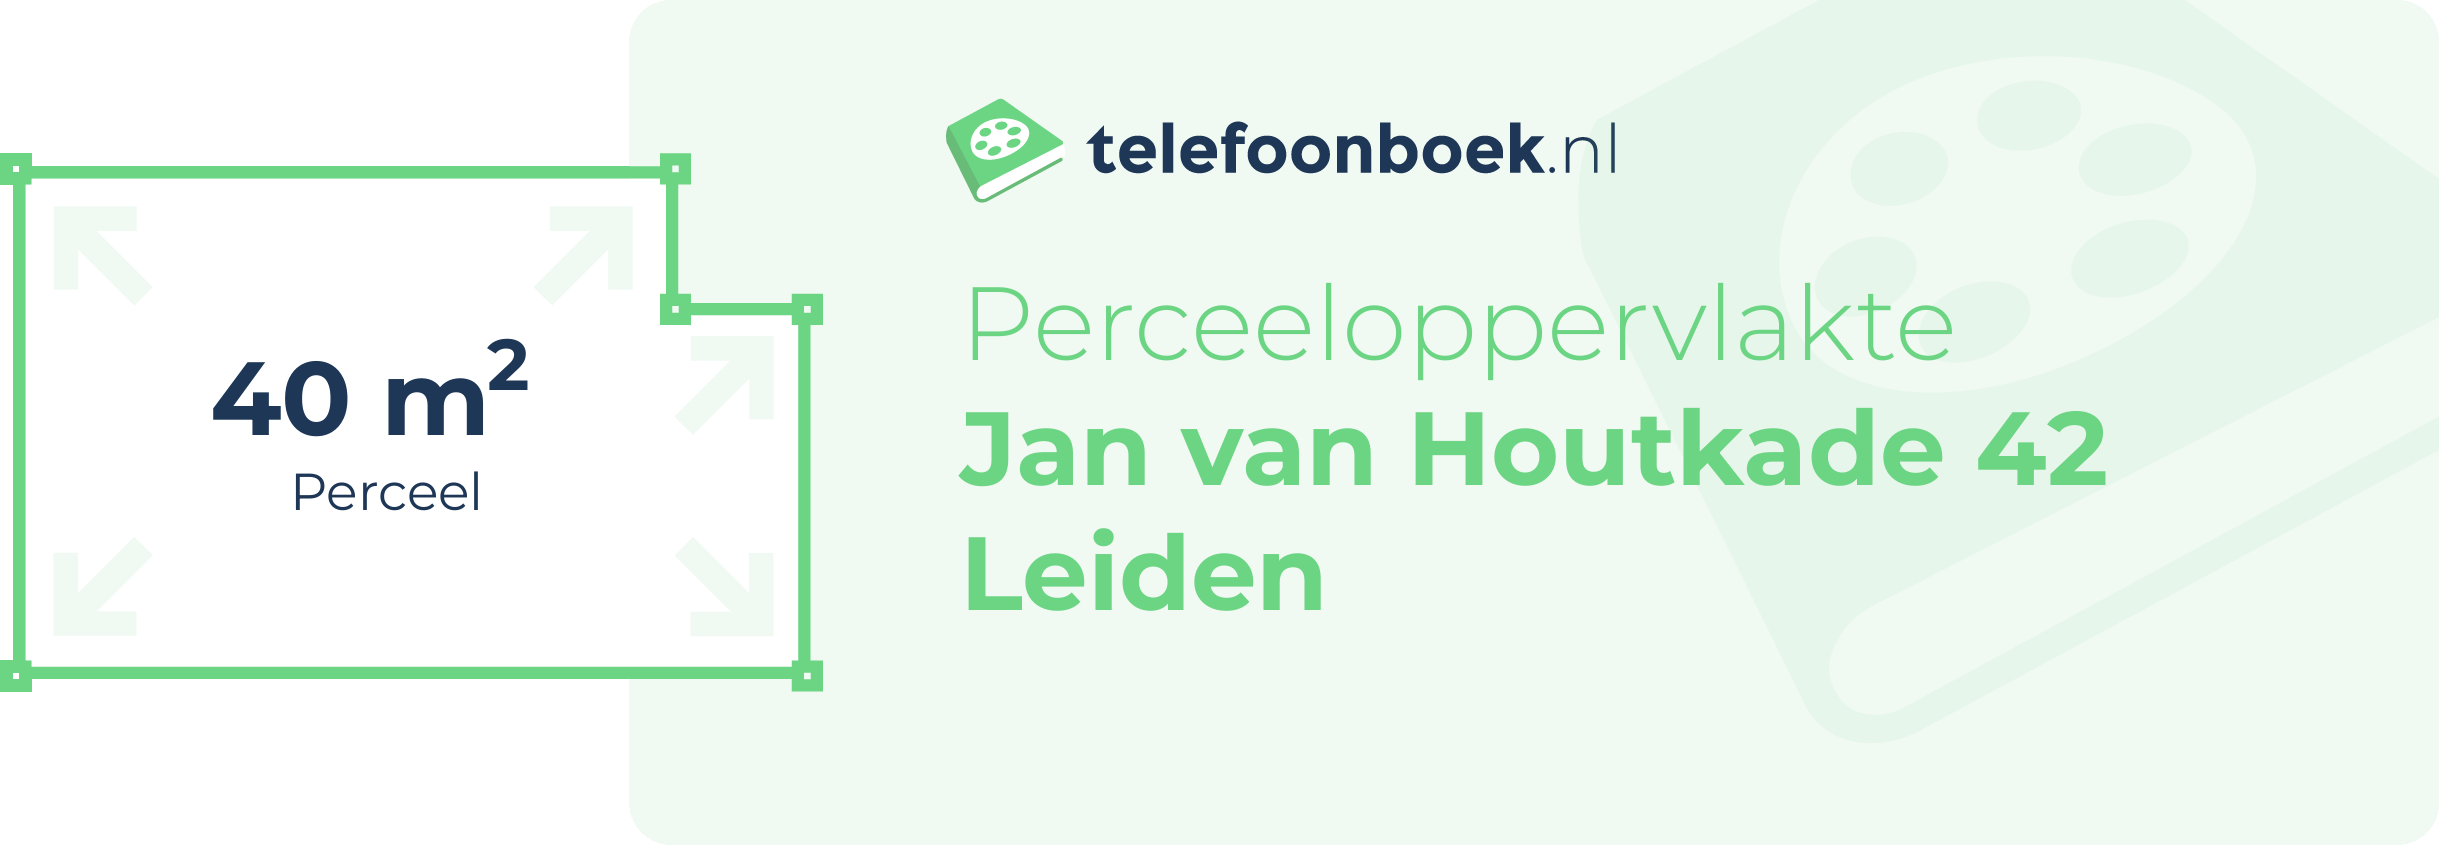 Perceeloppervlakte Jan Van Houtkade 42 Leiden